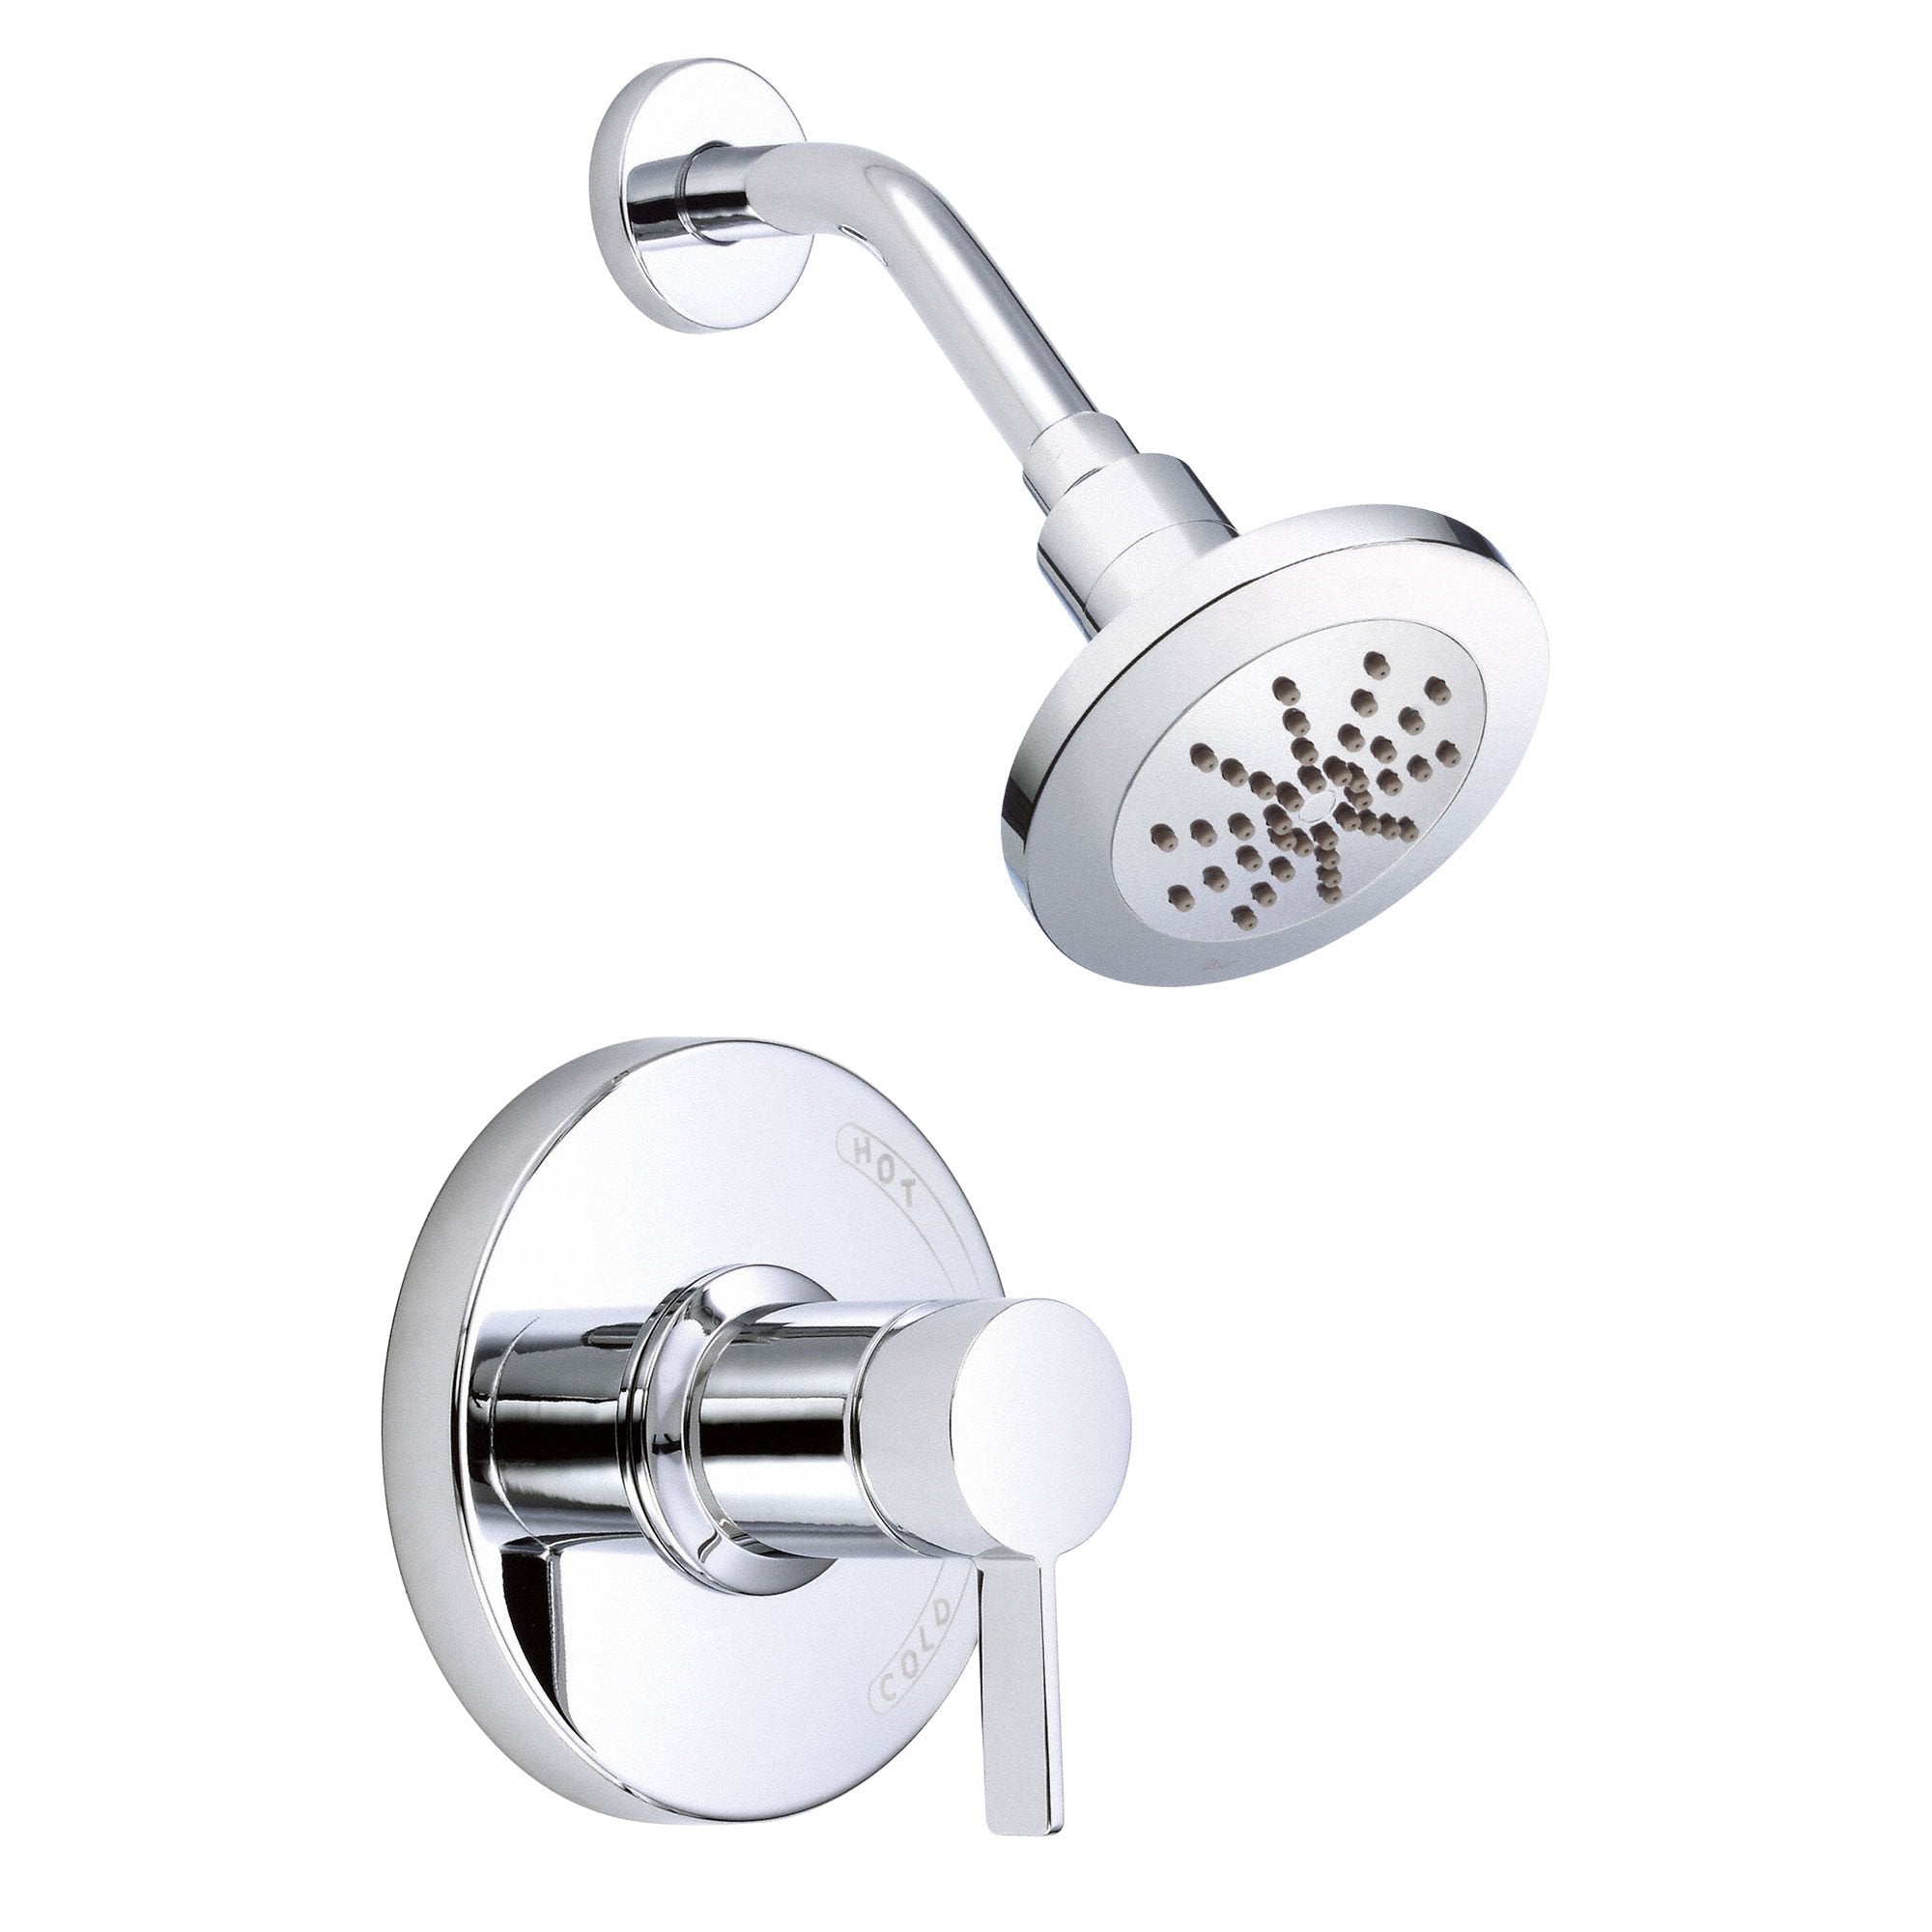 Danze Amalfi Chrome Single Handle Pressure Balance Shower Faucet INCLUDES Rough-in Valve